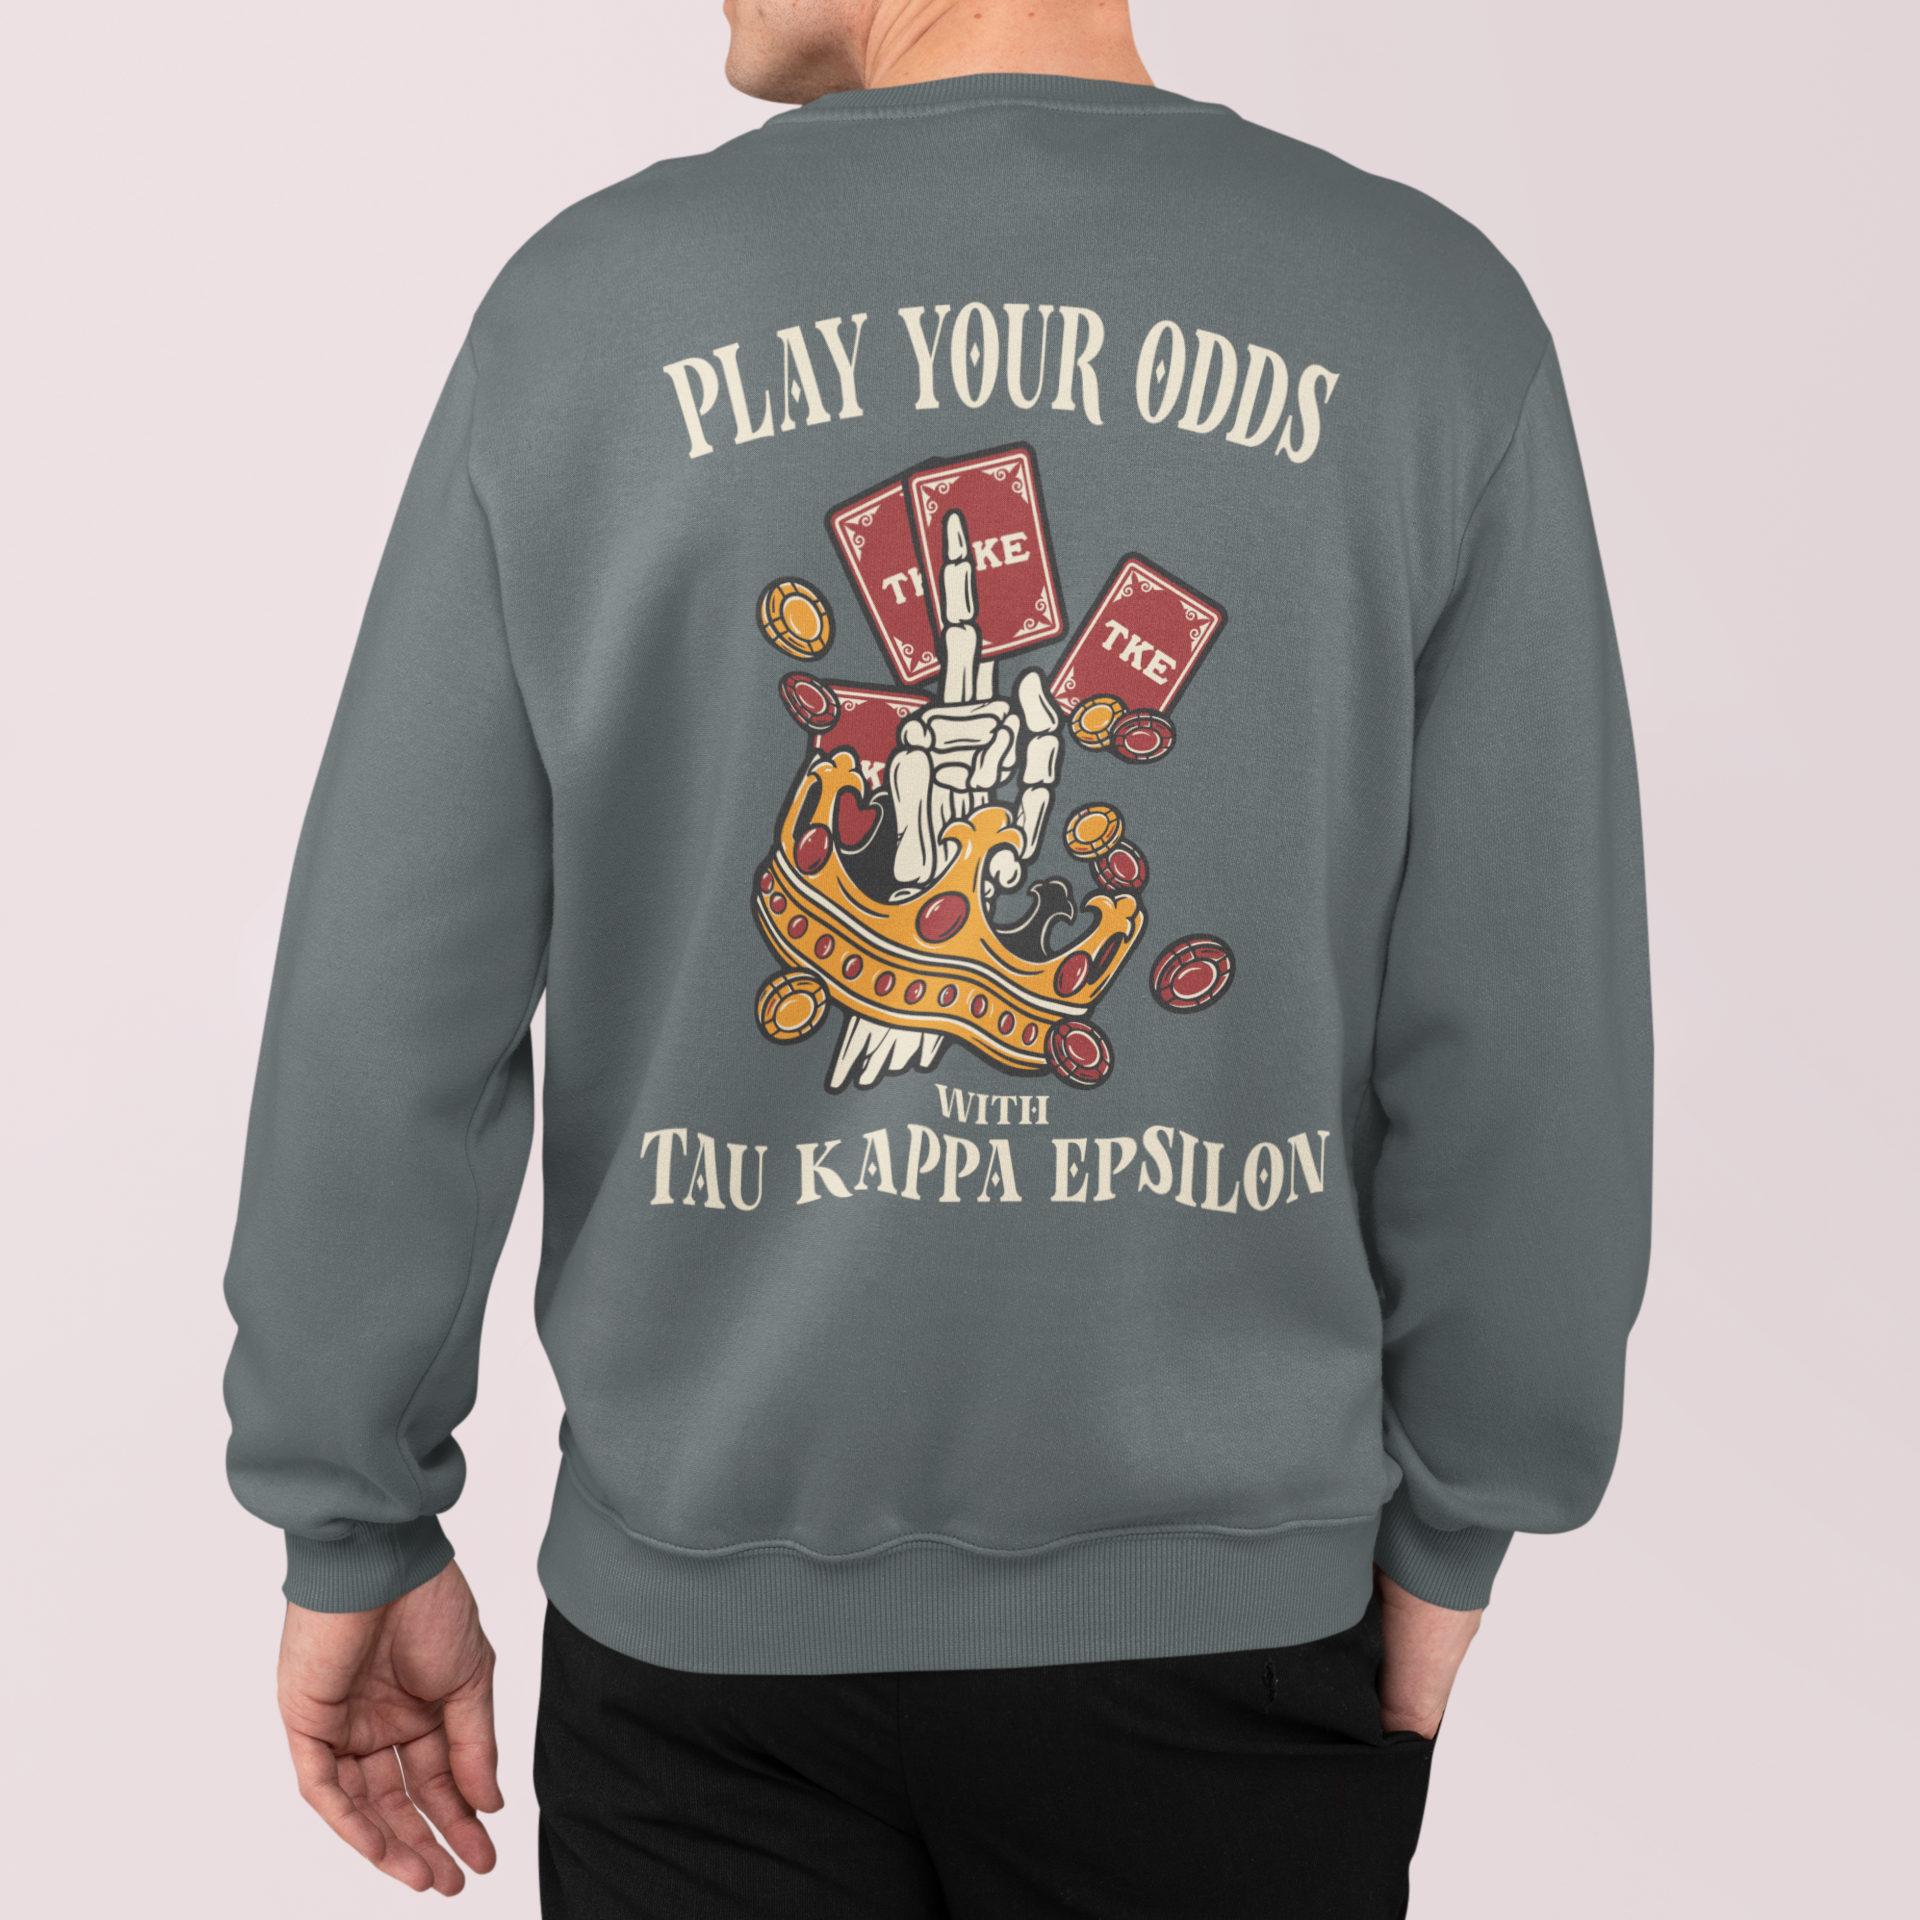 Tau Kappa Epsilon Graphic Crewneck Sweatshirt | Play Your Odds | TKE Clothing and Merchandise